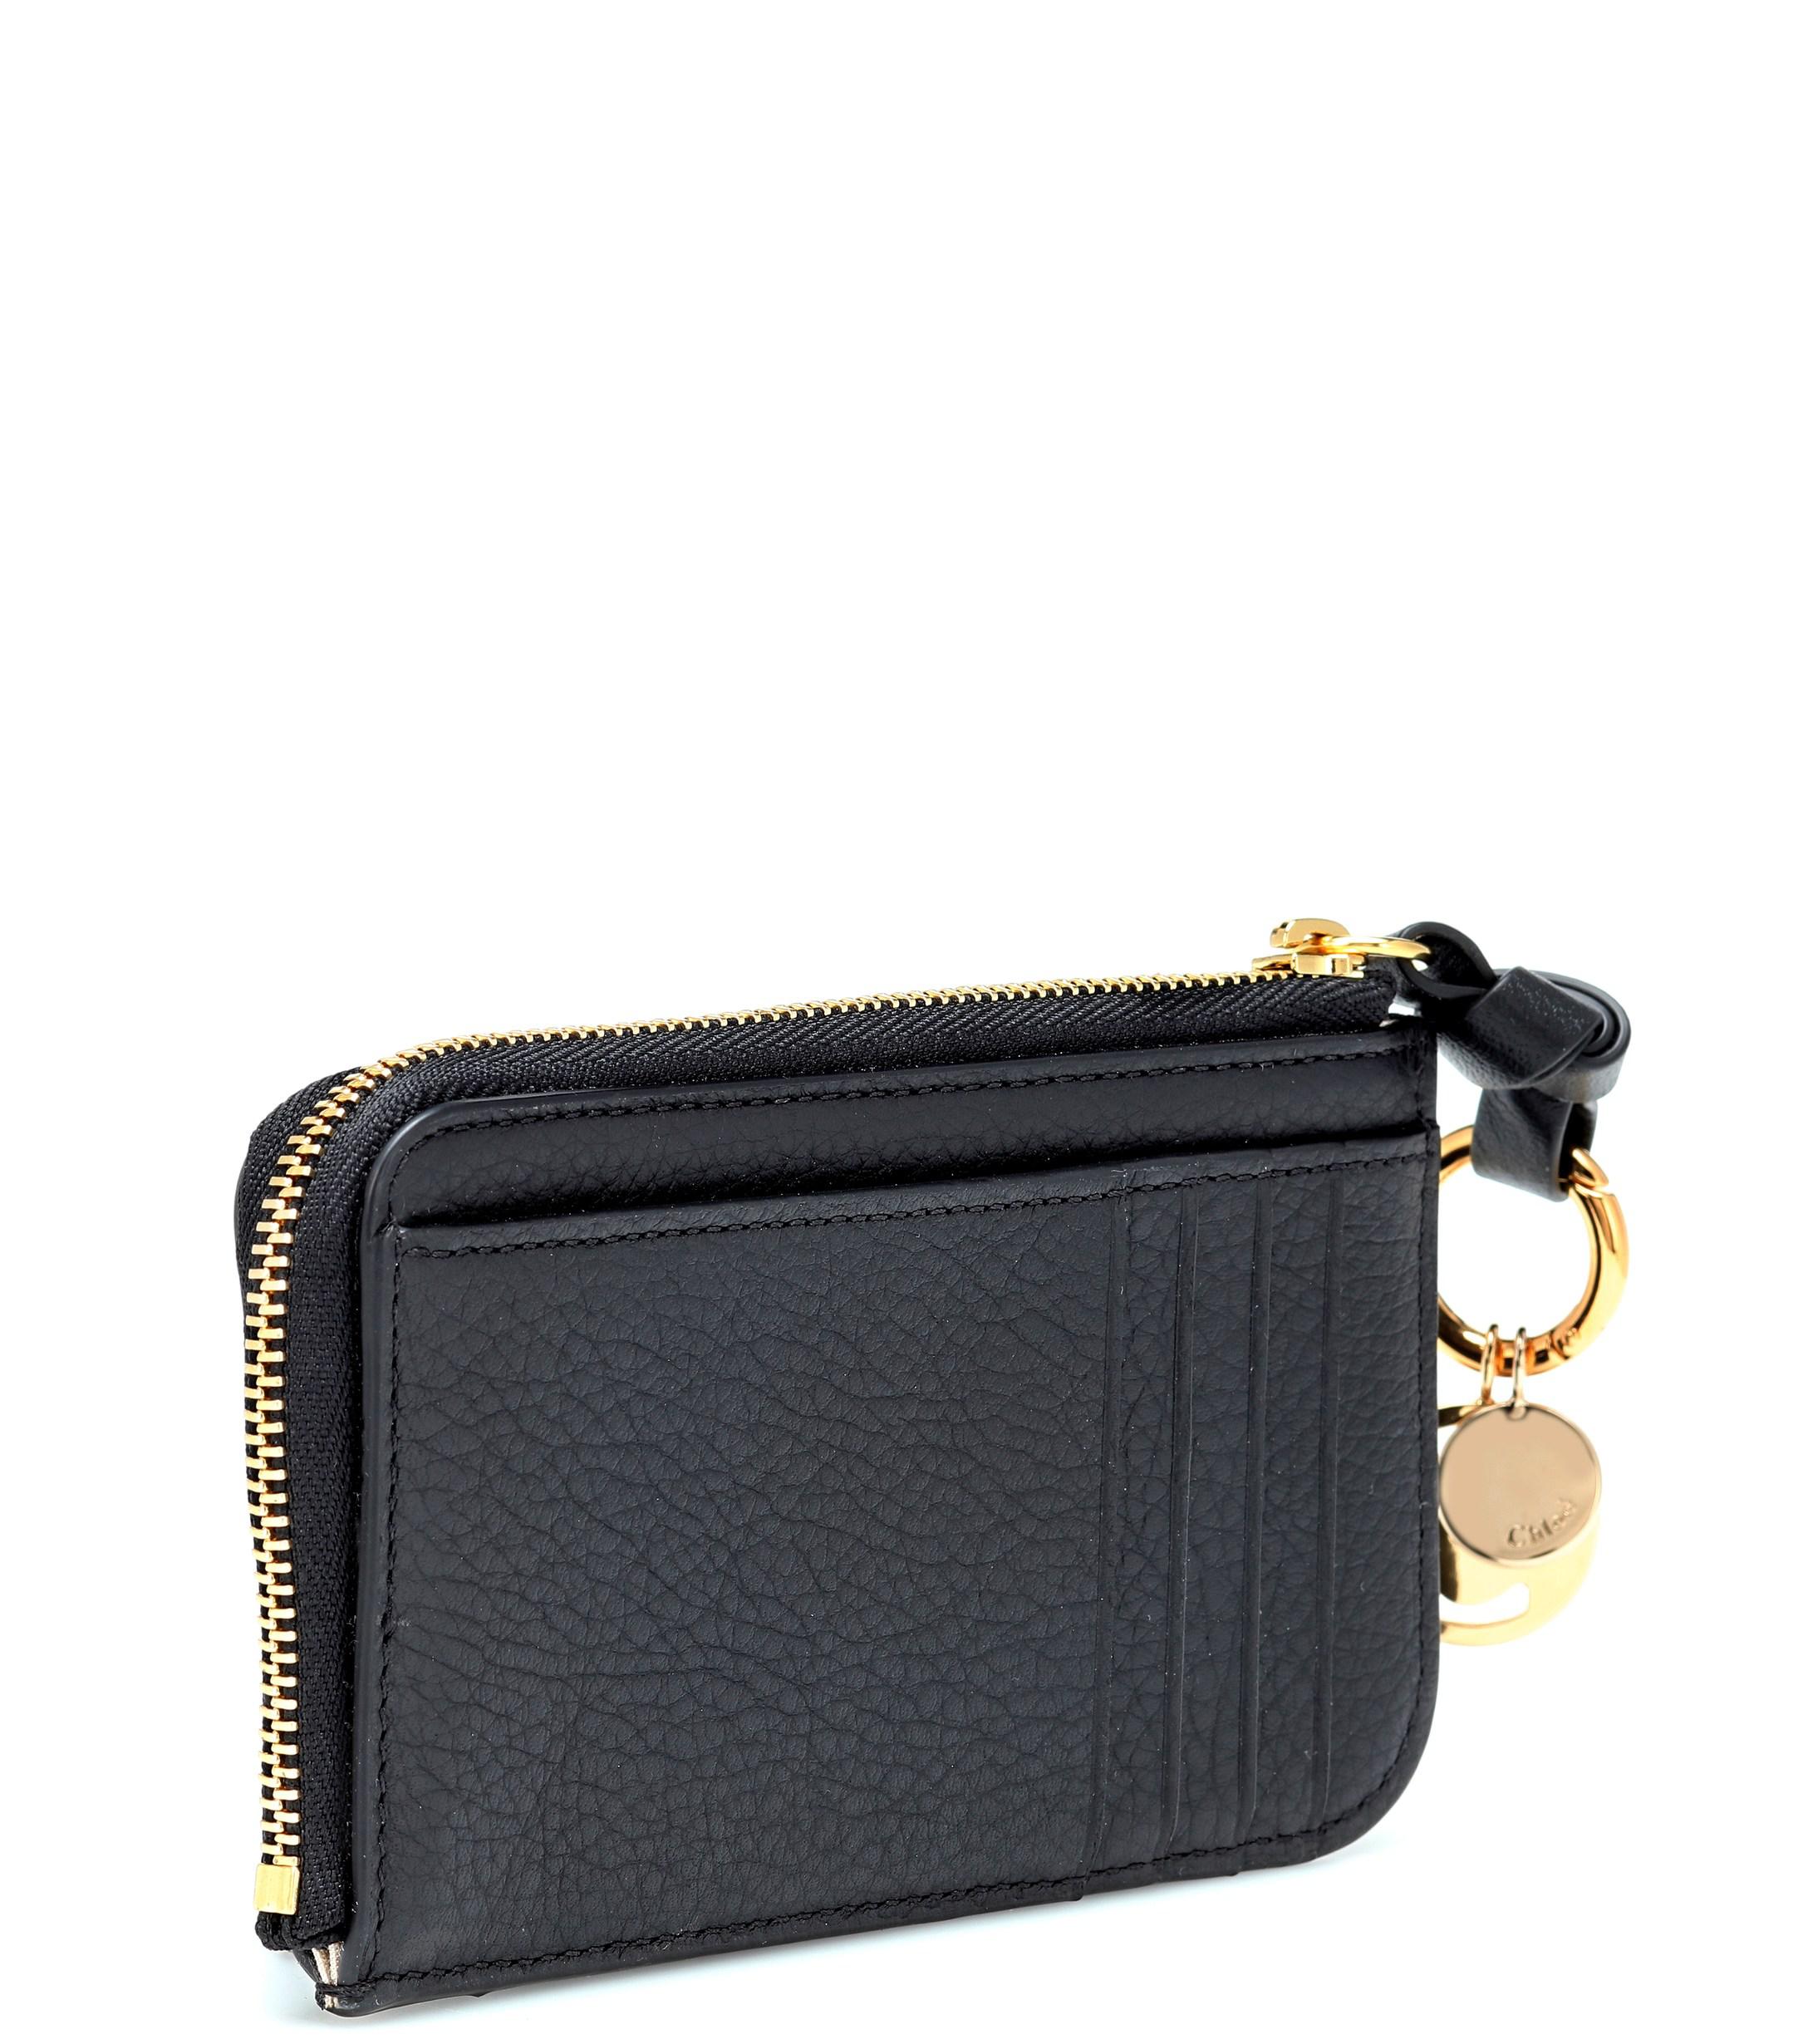 Lyst - Chloé Alphabet Leather Wallet in Black